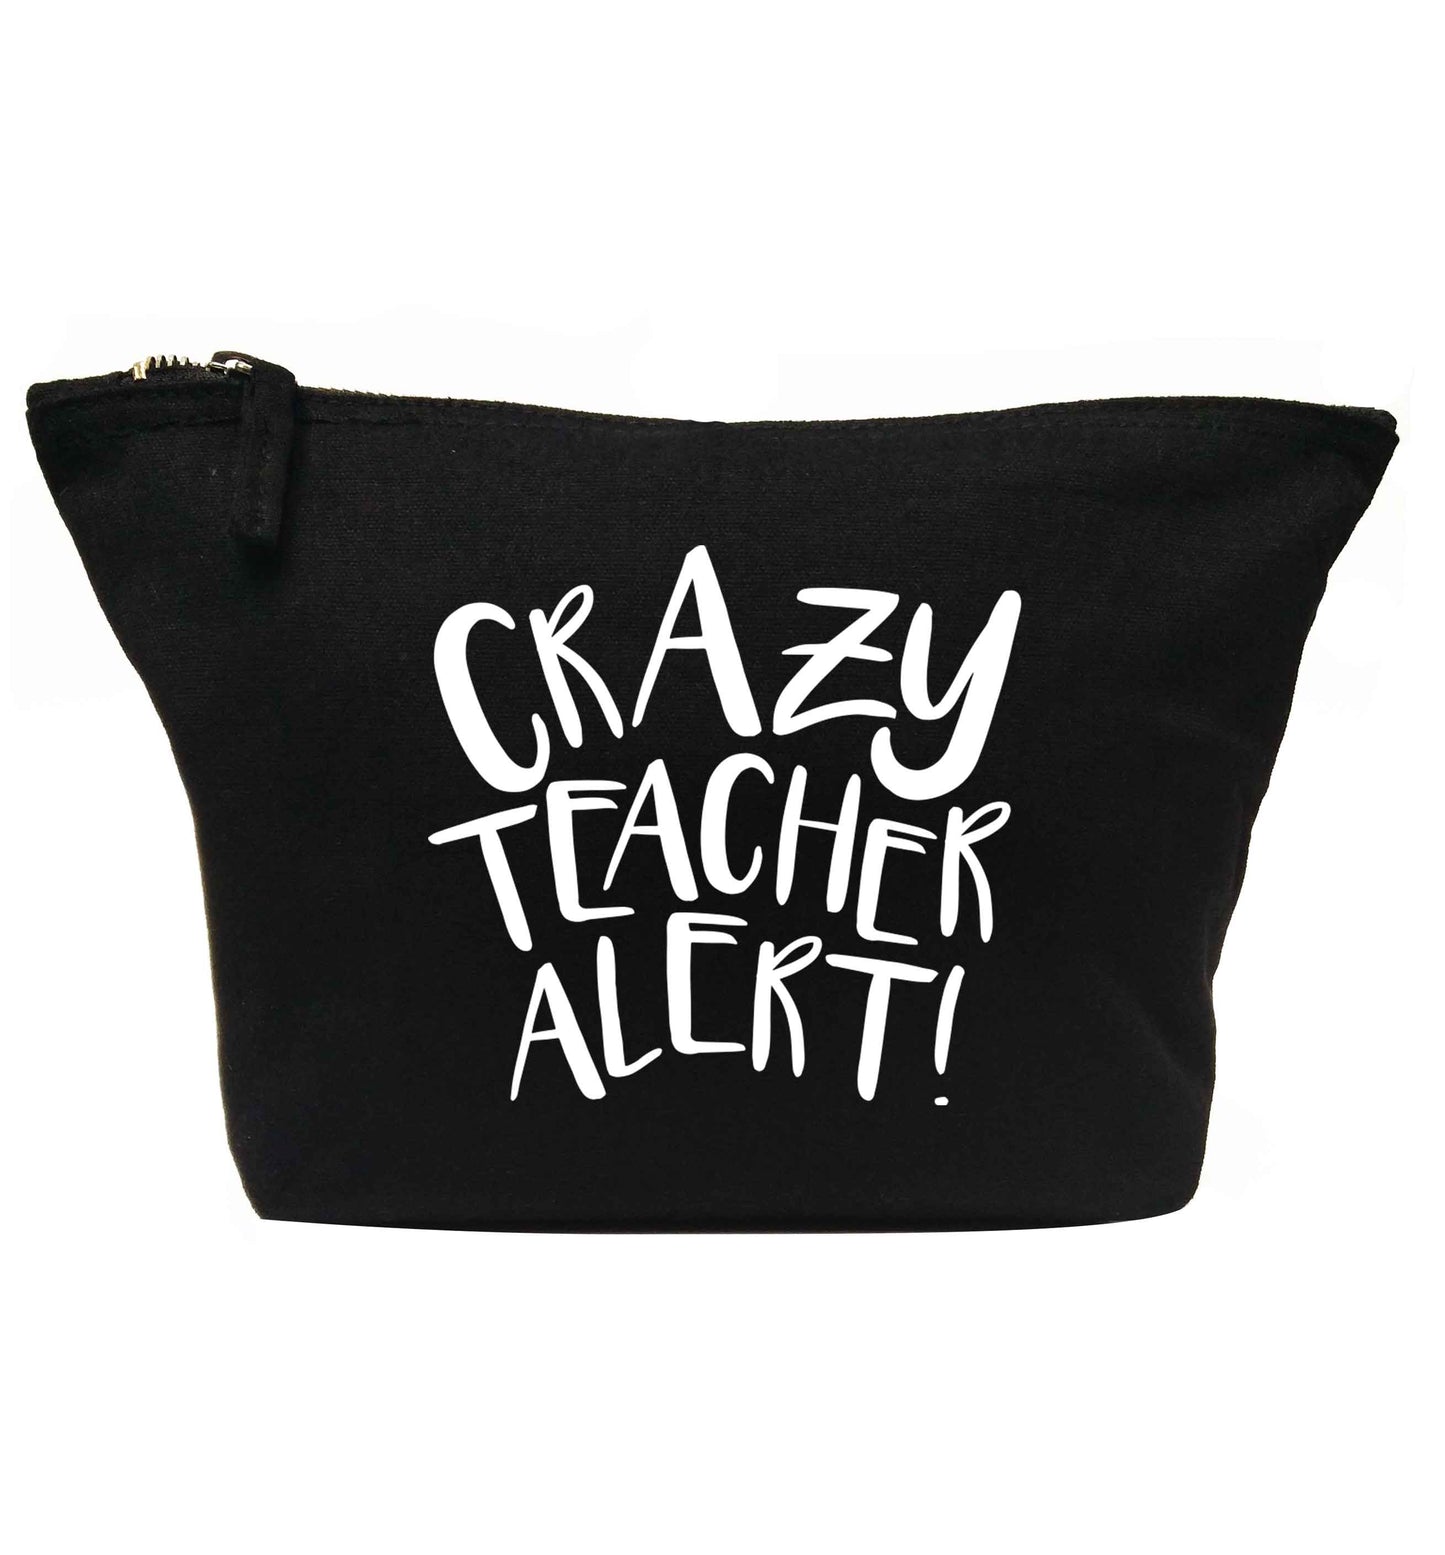 Crazy teacher alert | Makeup / wash bag